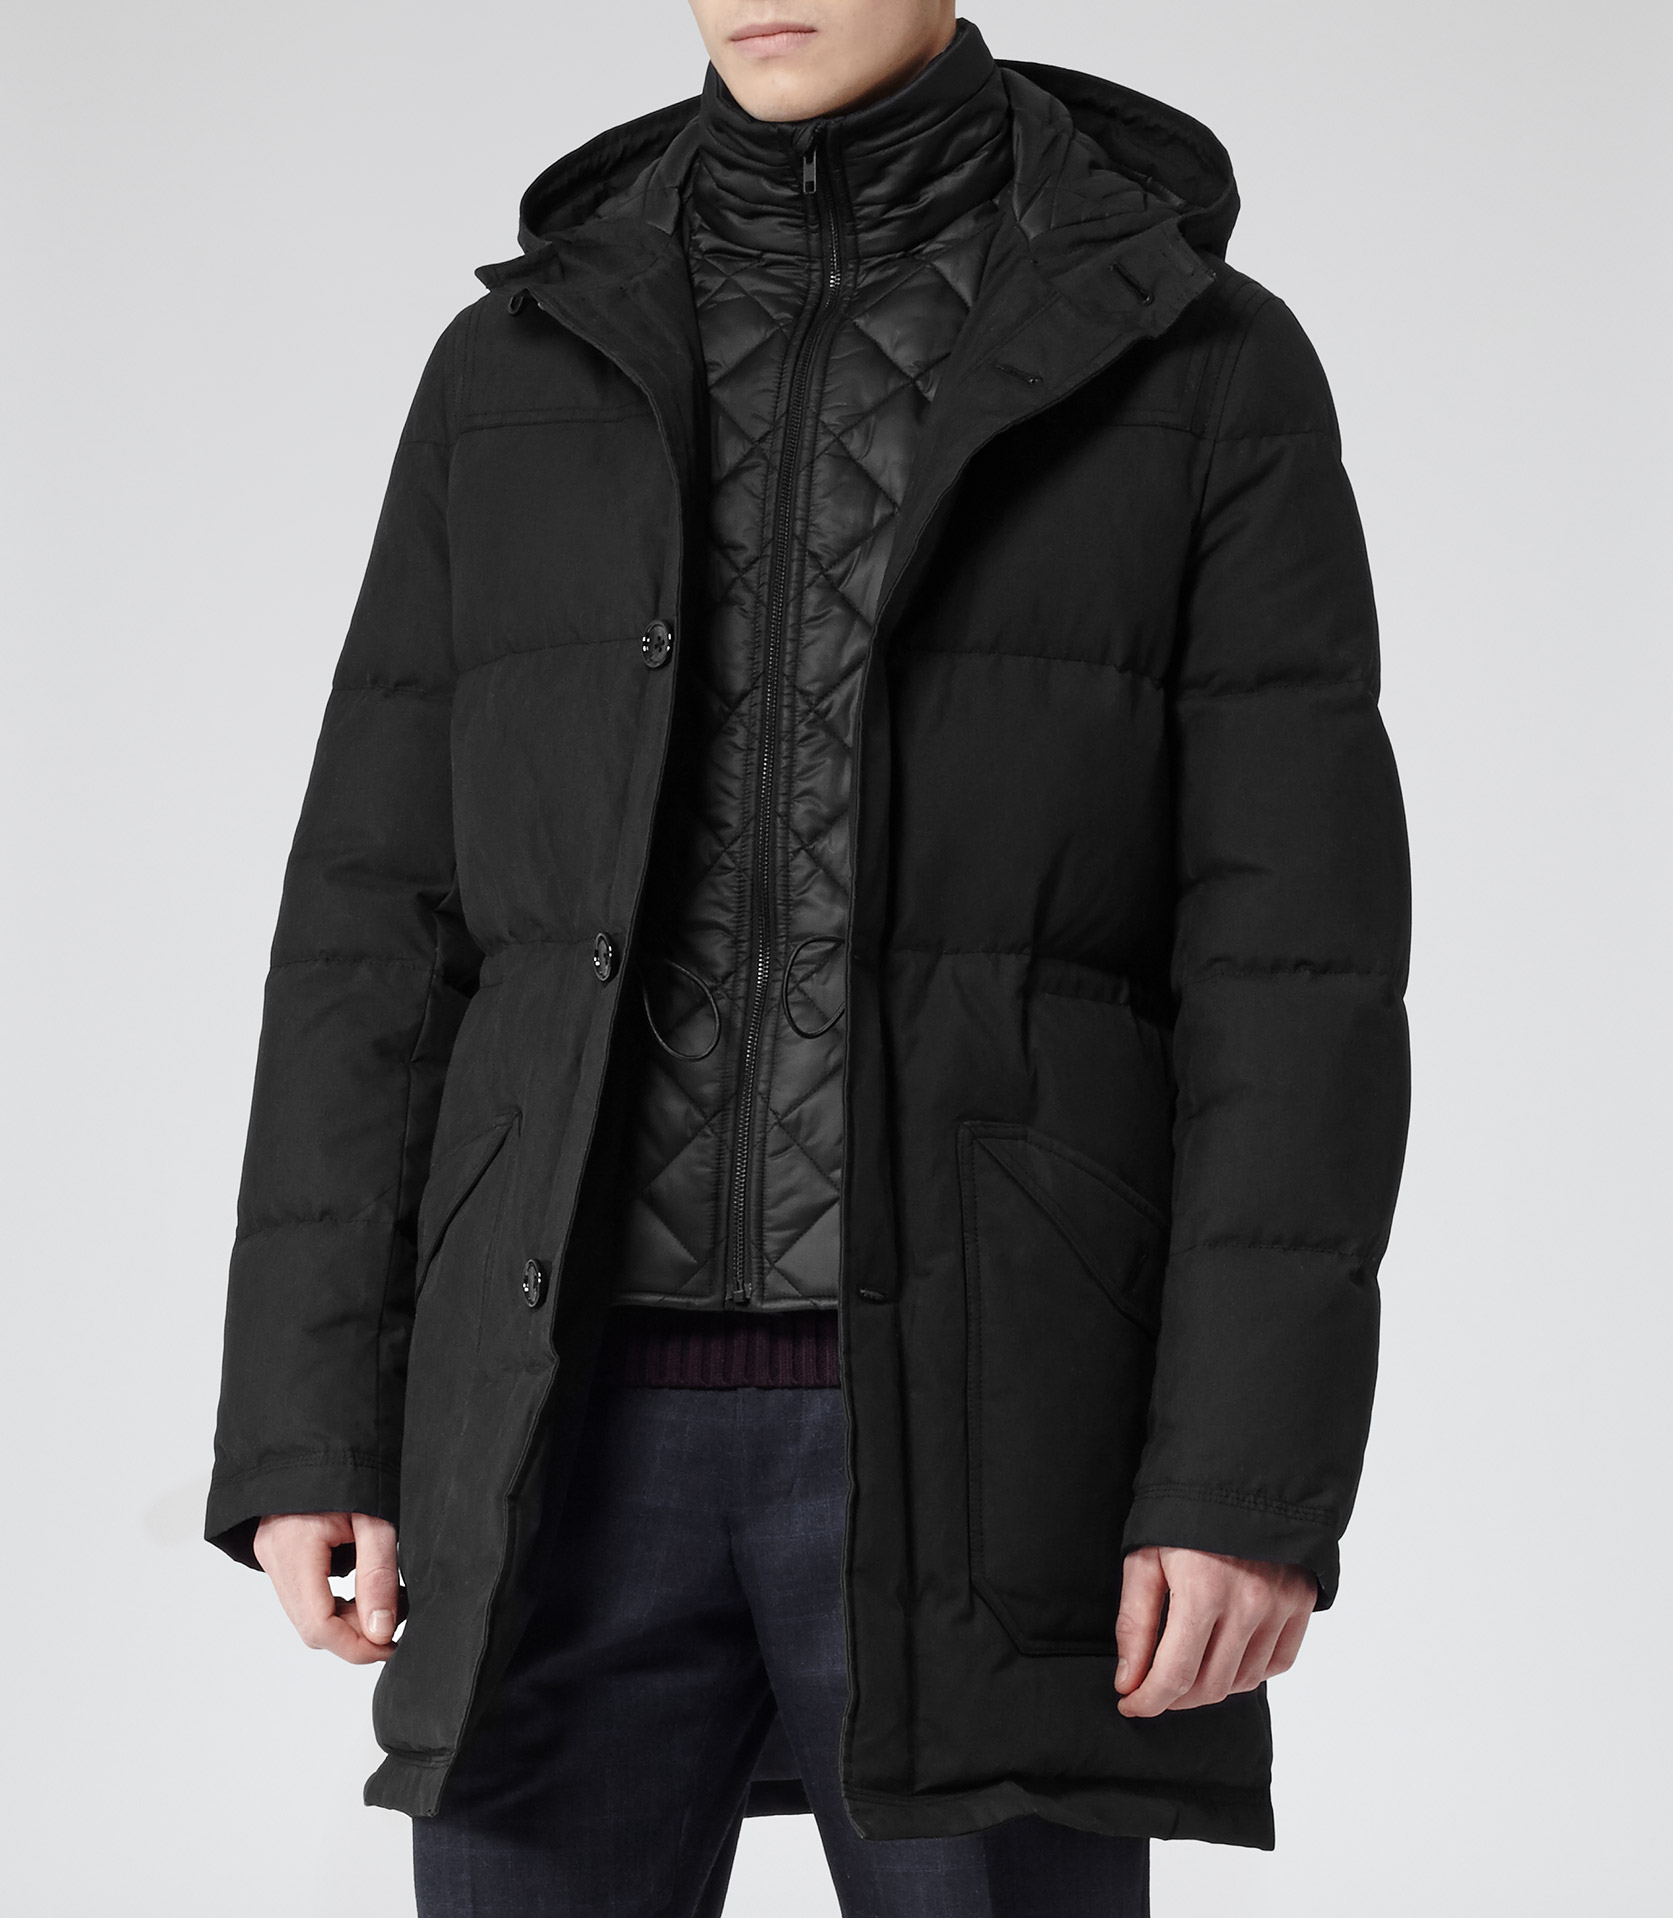 Reiss Bauhaus Down Jacket in Black for Men - Lyst